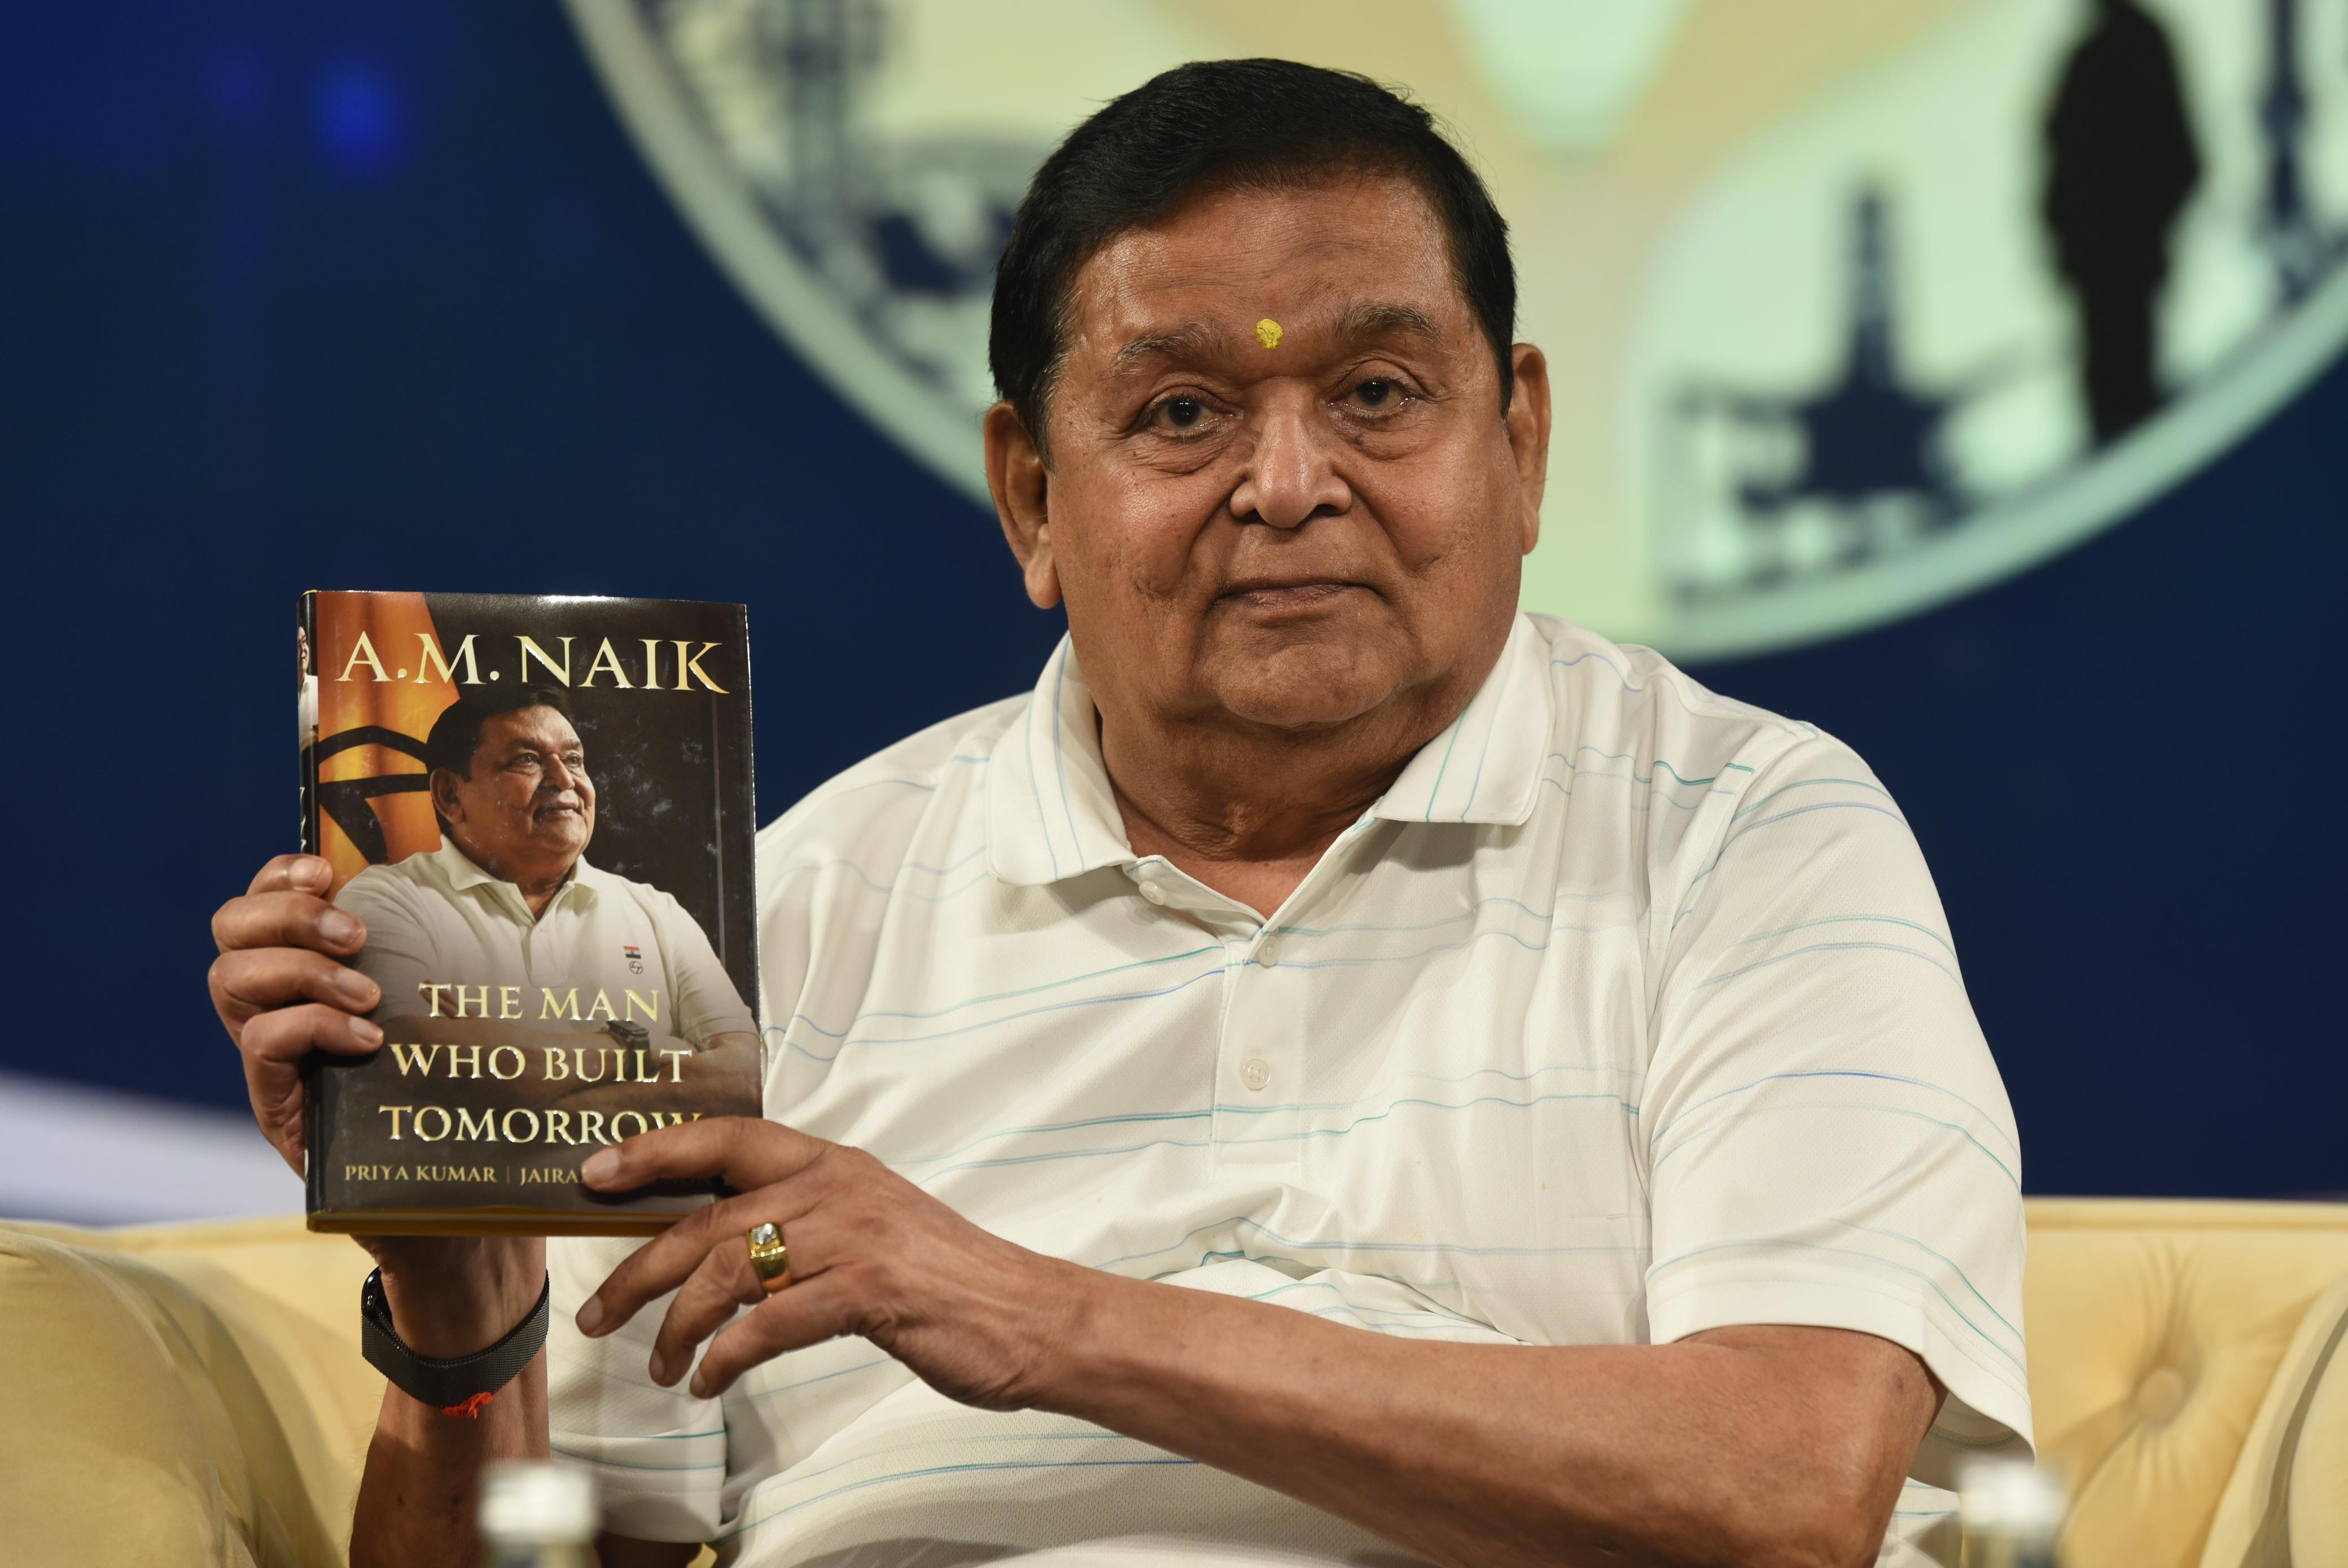 Mr A M Naik, Chairman Emeritus, L&T unveils his book, The Man Who Built Tomorrow